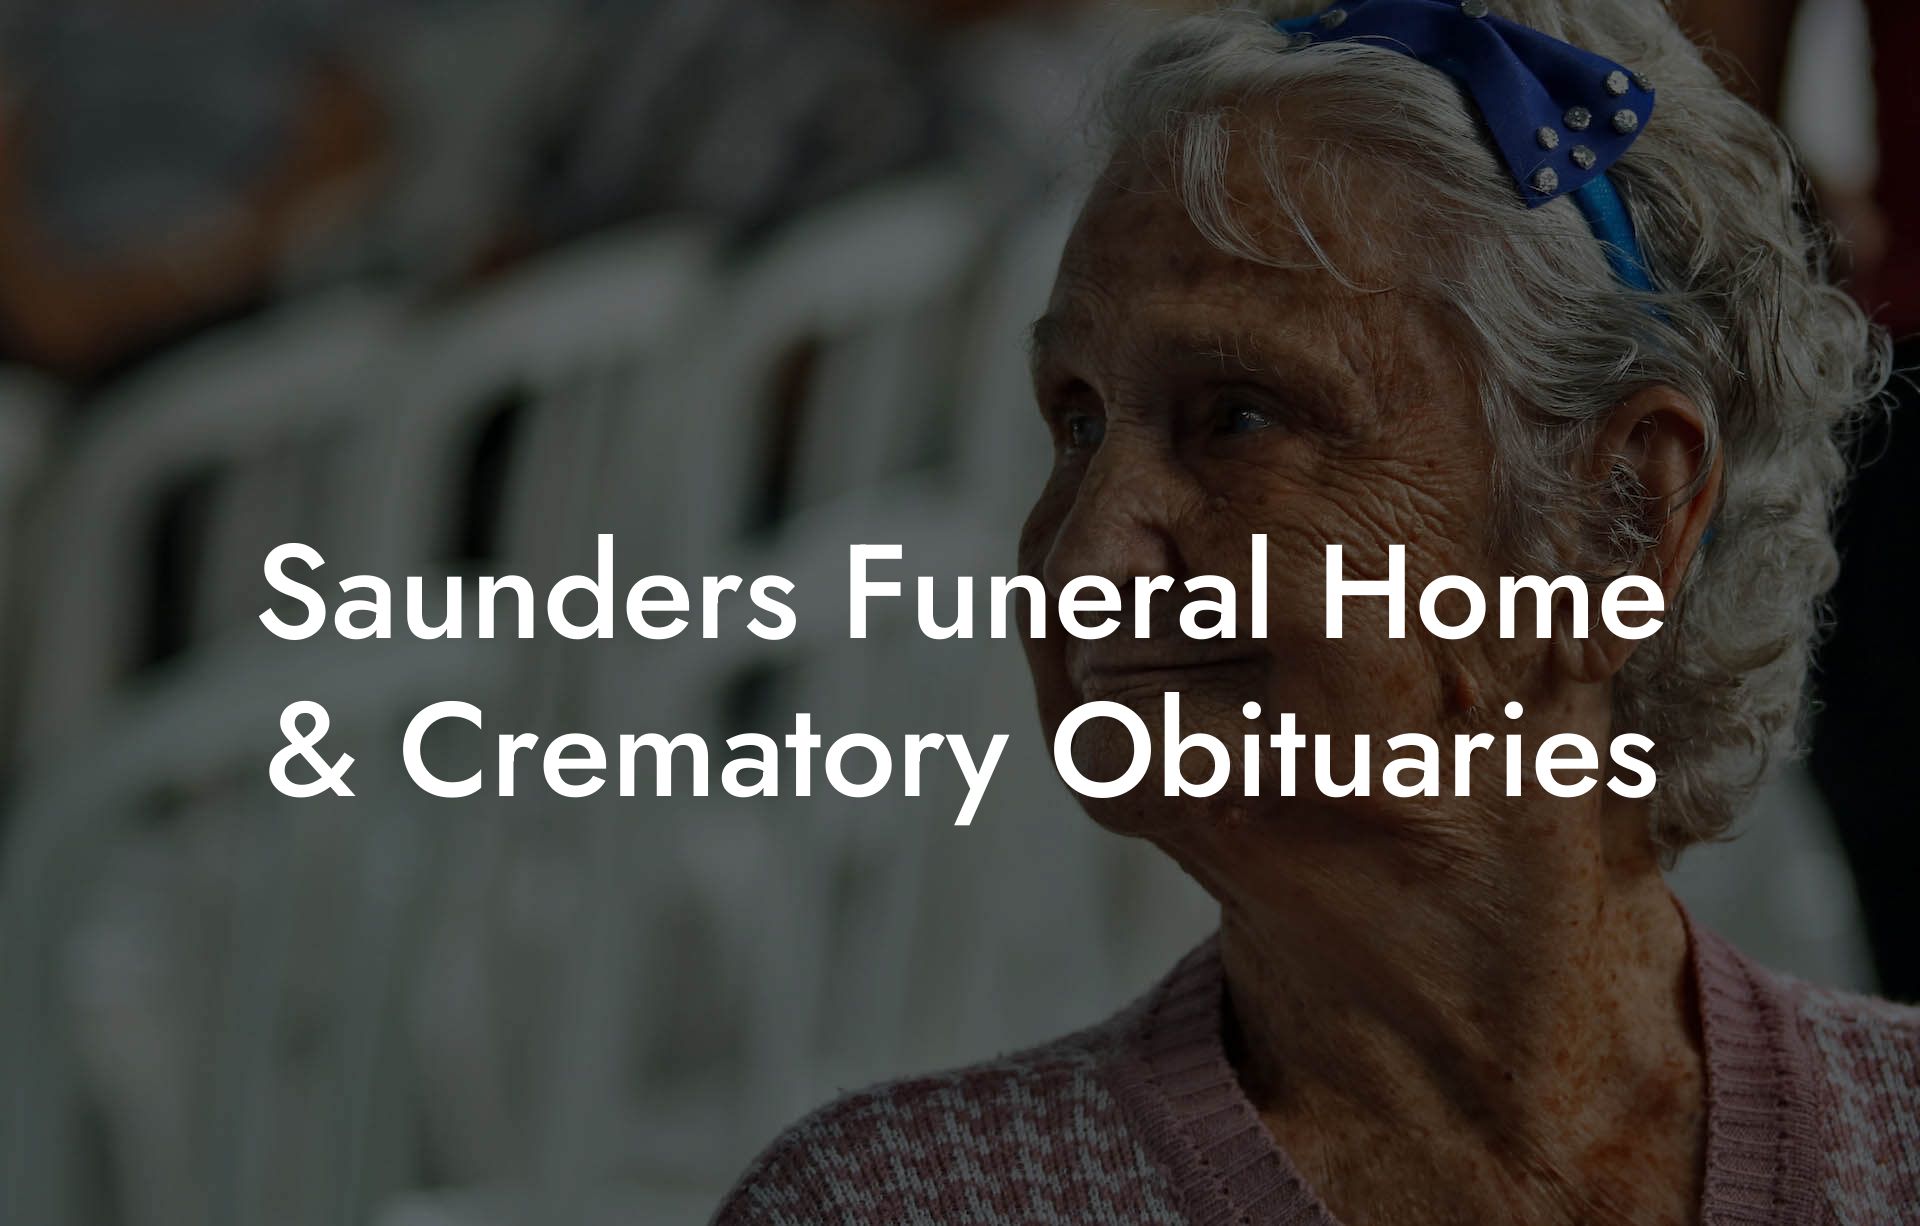 Saunders Funeral Home & Crematory Obituaries